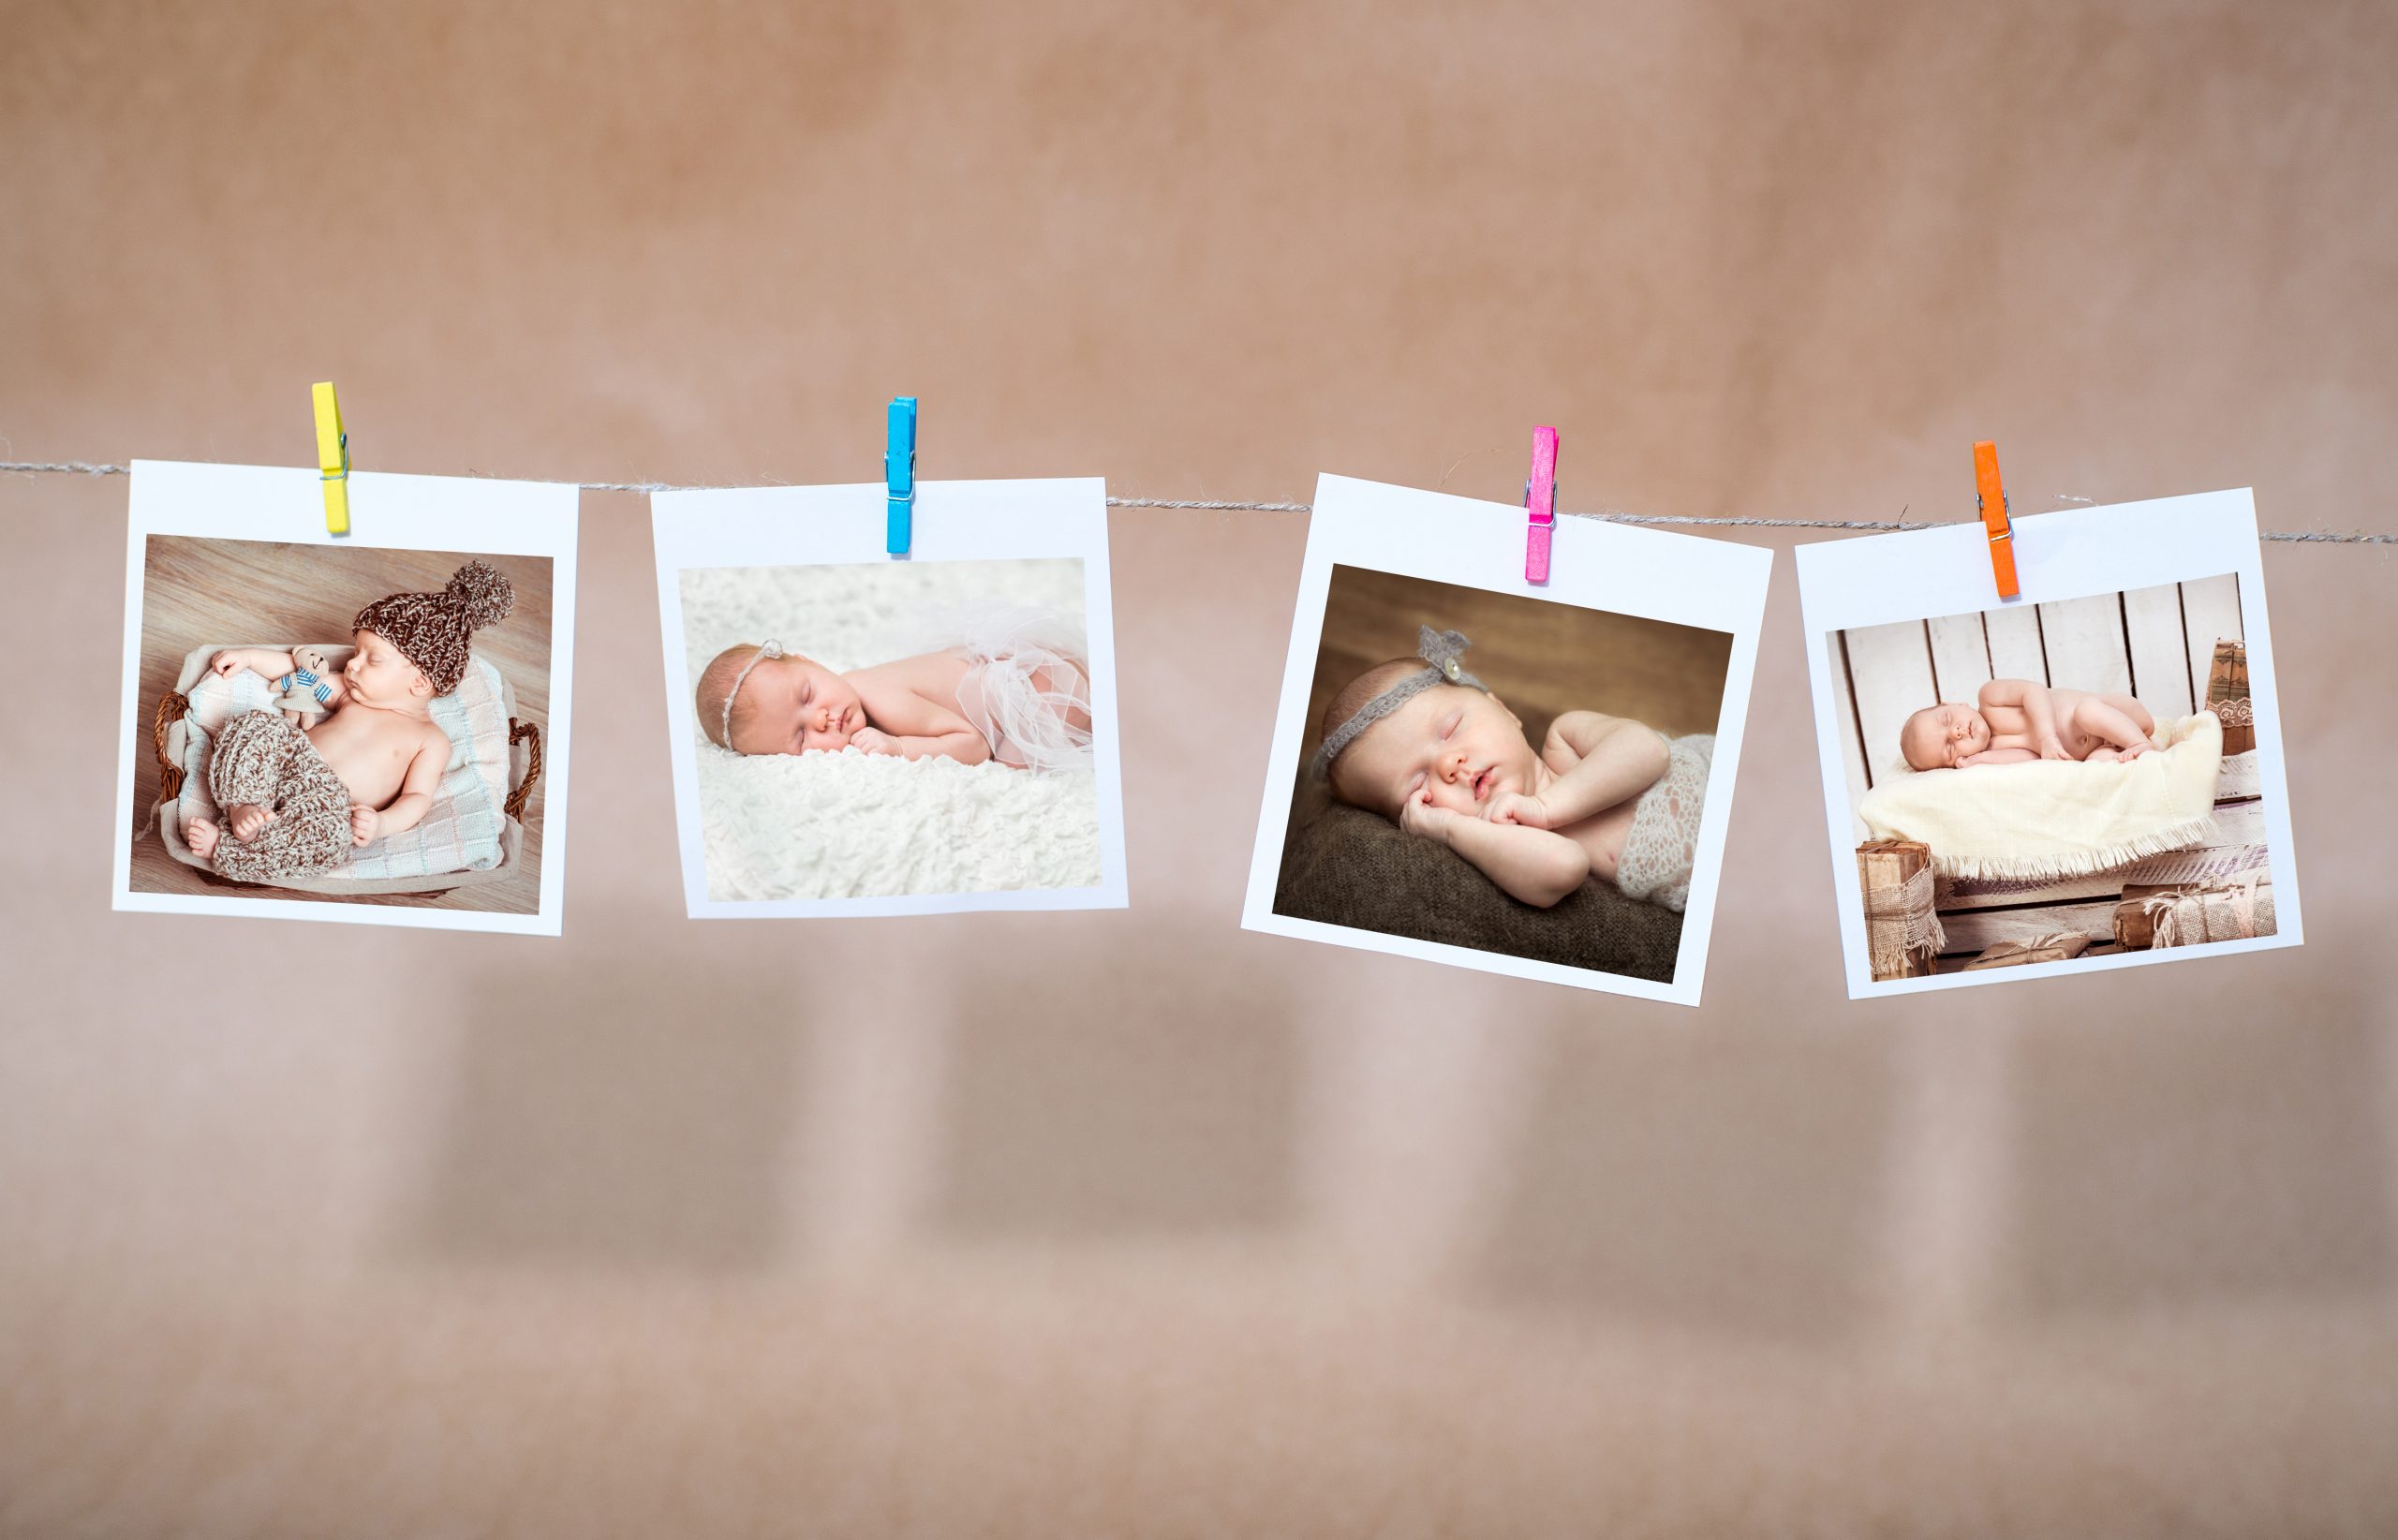 Best Lighting for Newborn Photography